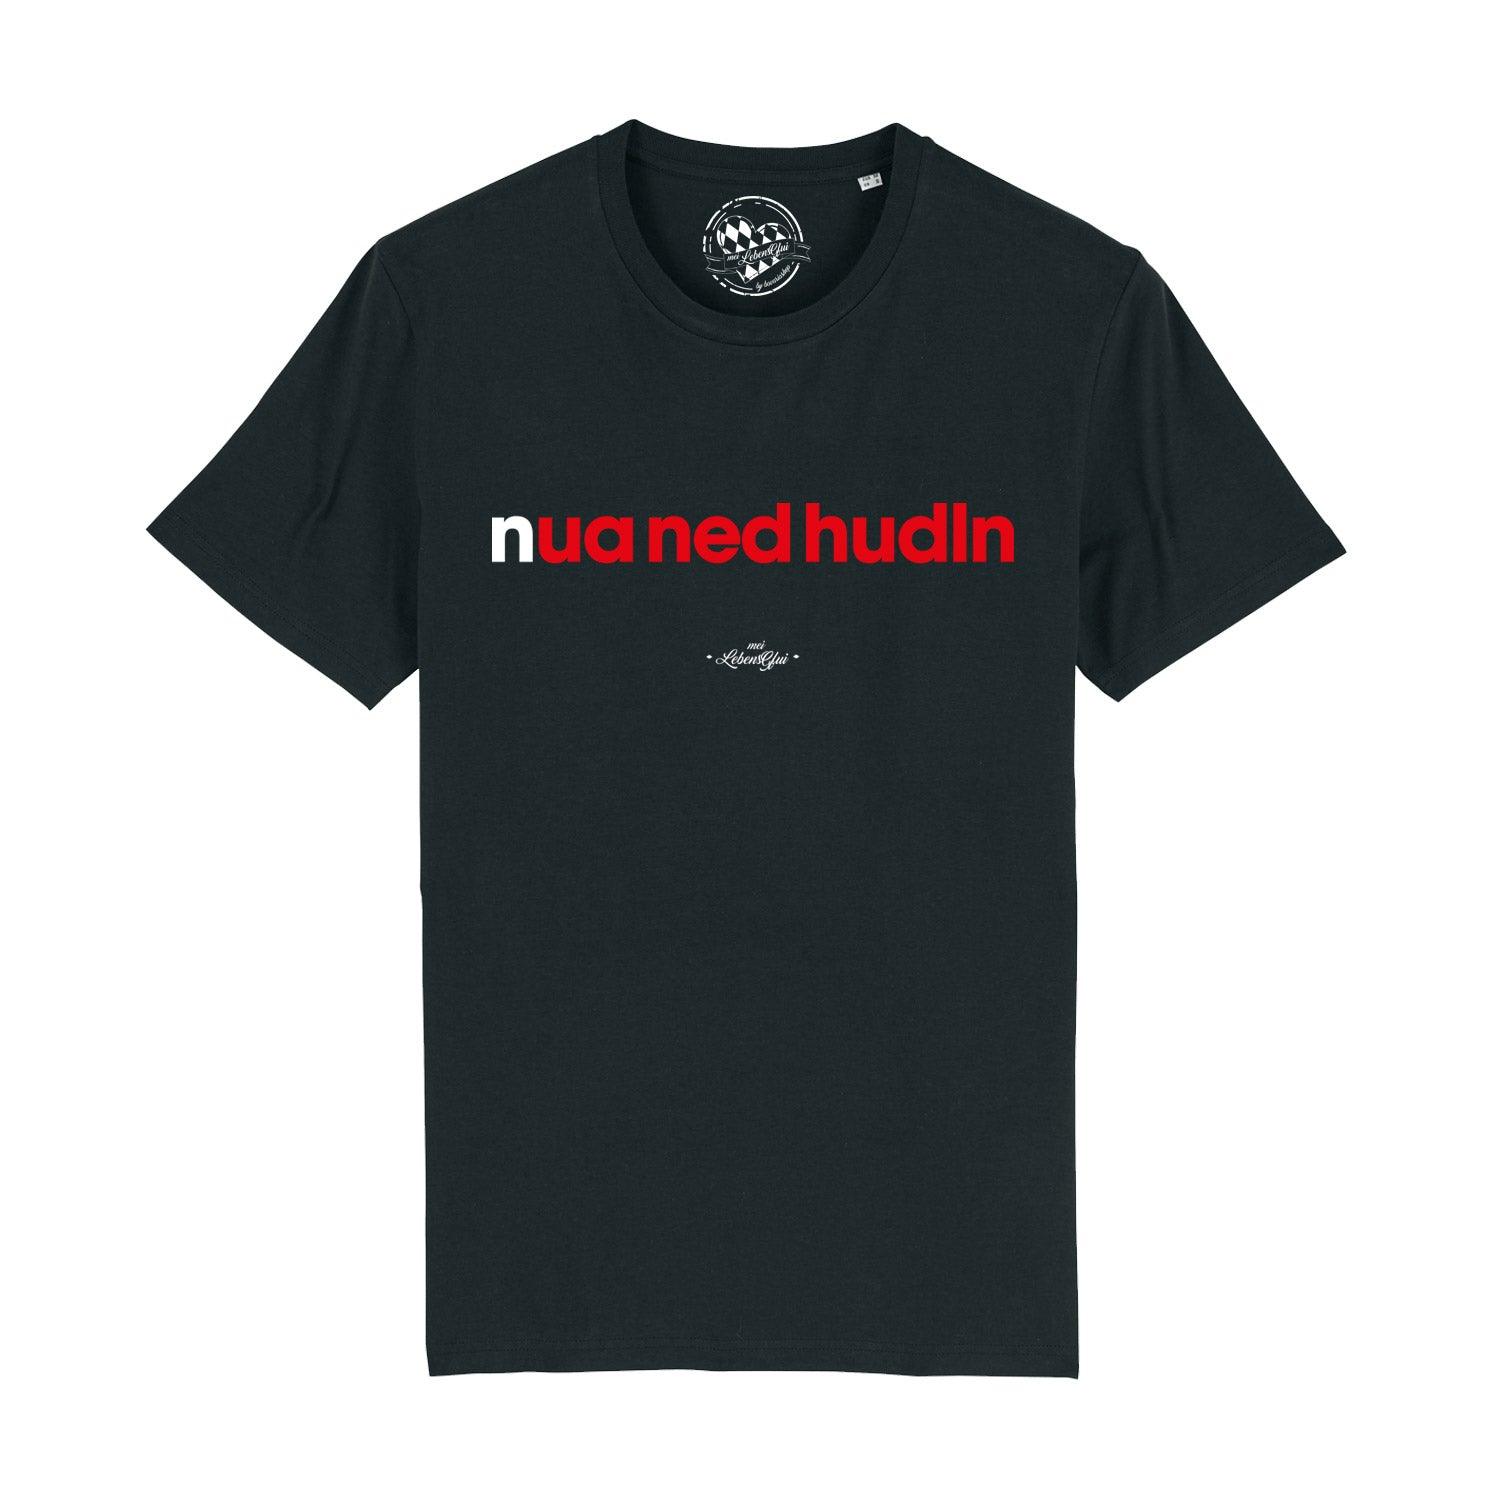 Herren T-Shirt "Nua ned hudln" - bavariashop - mei LebensGfui